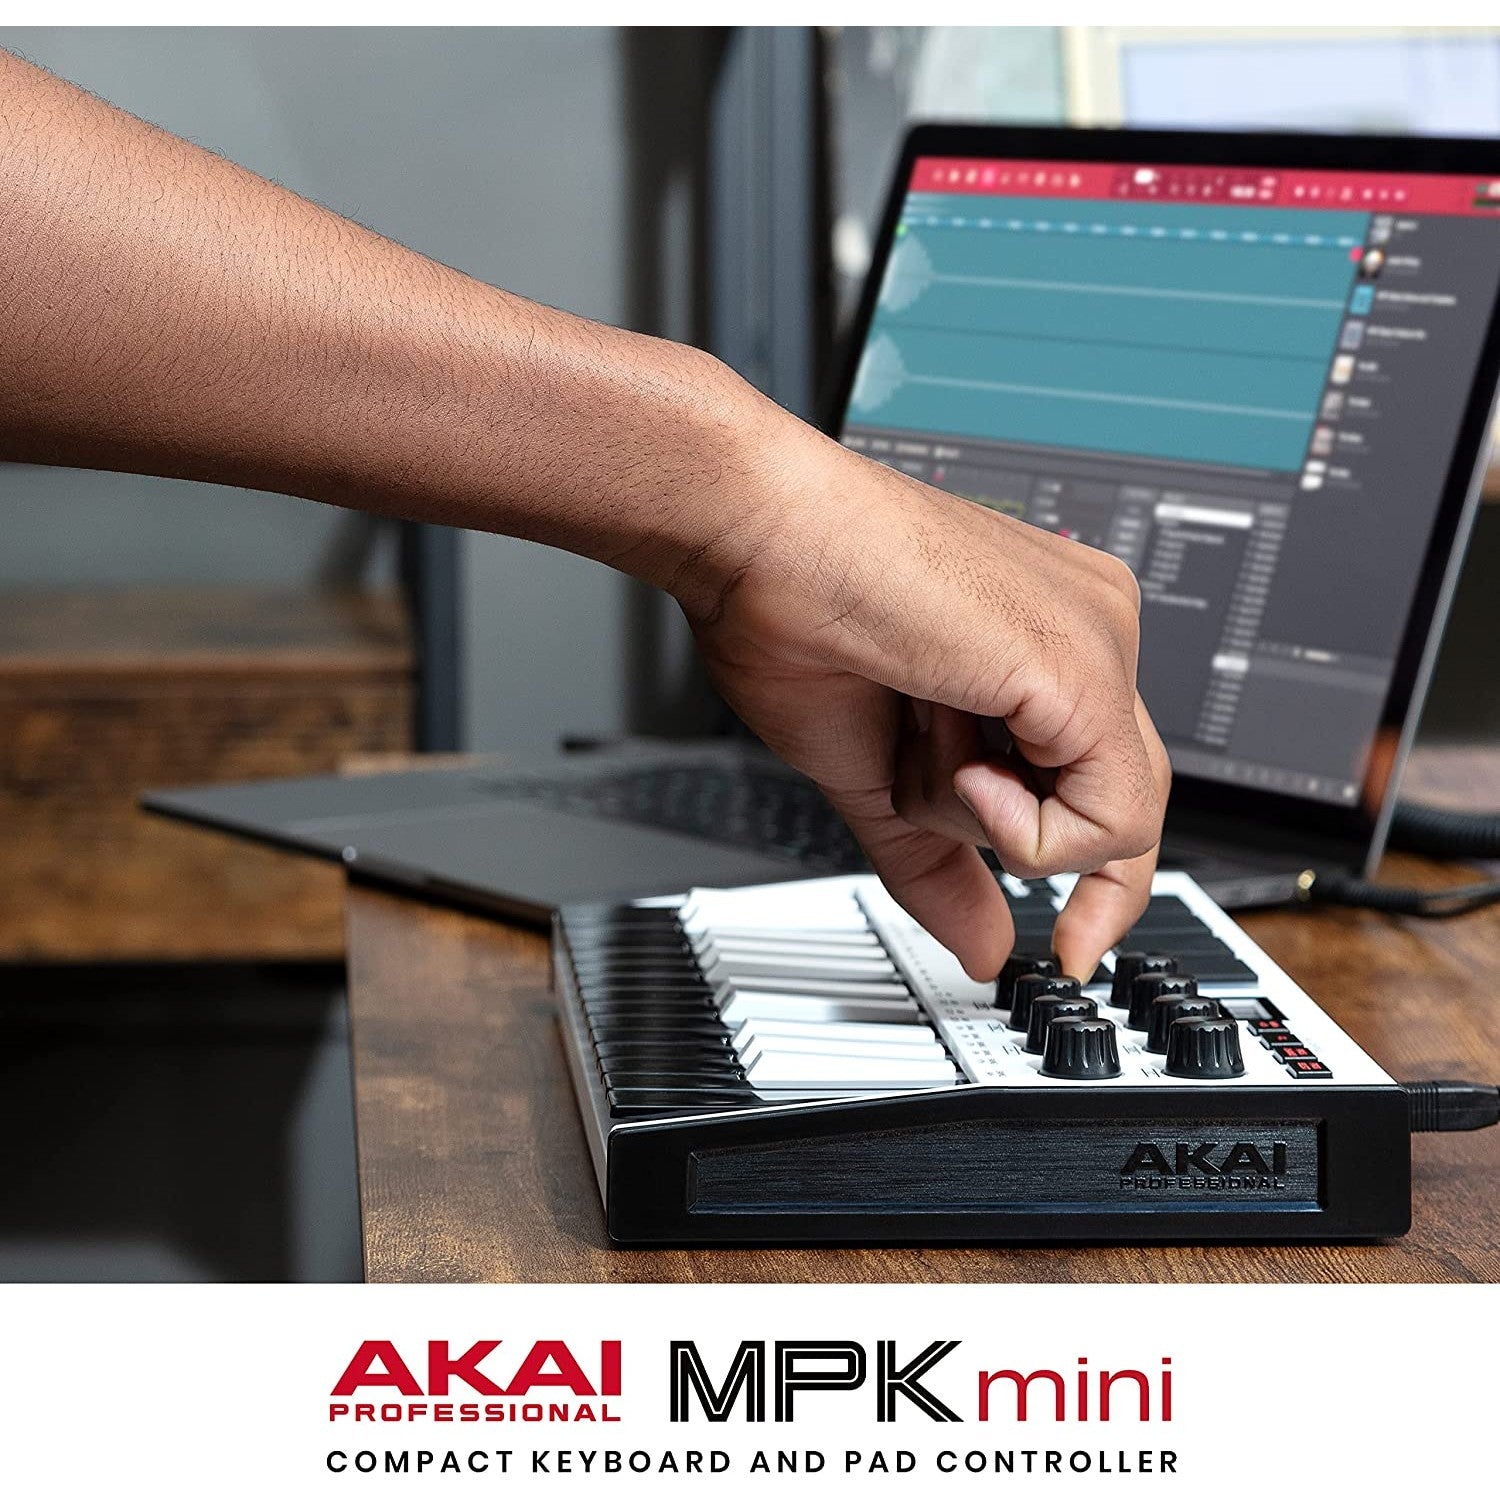 AKAI MPK Mini MK3 - Before you buy it, watch this